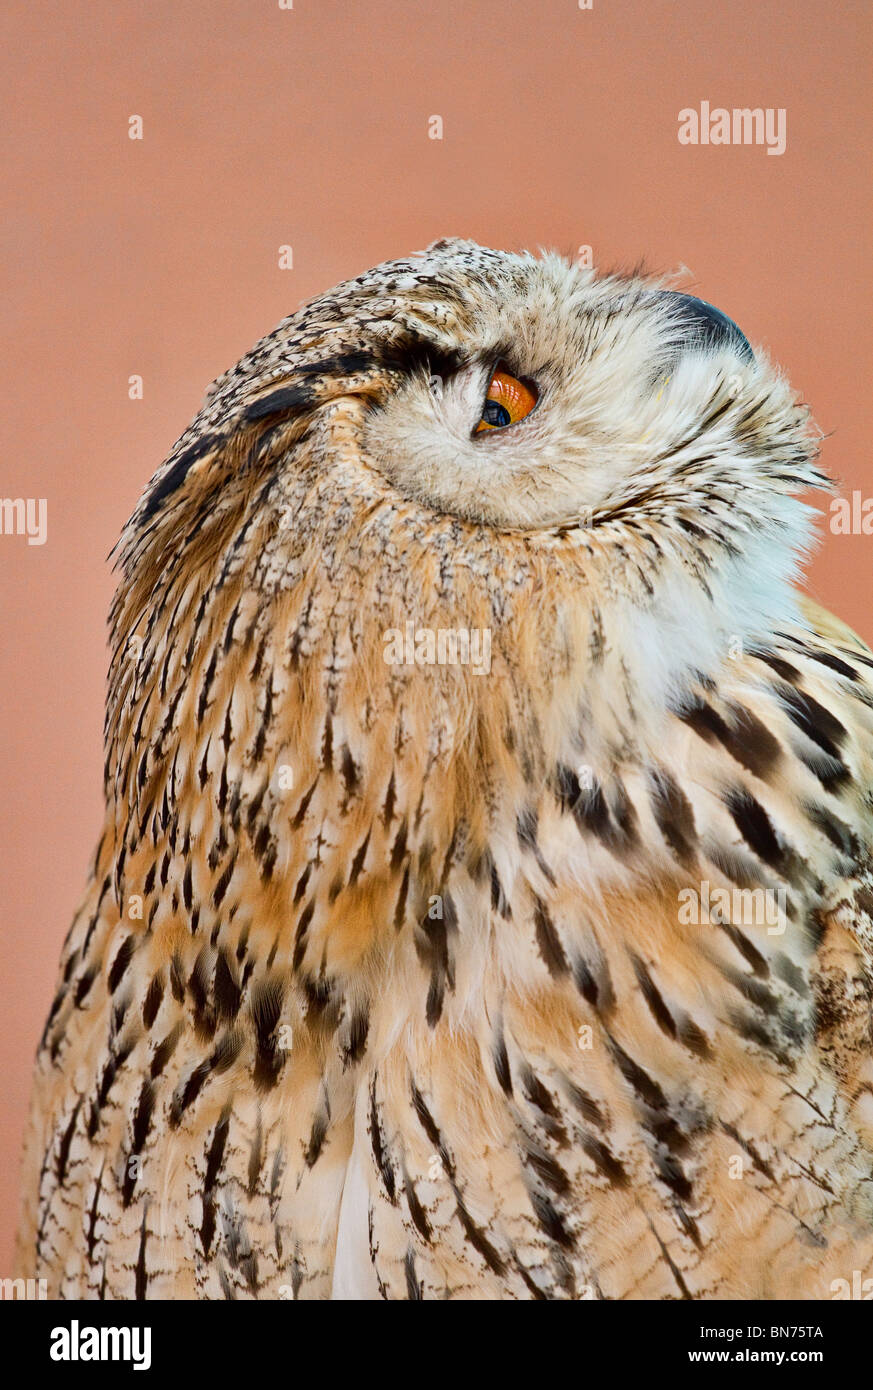 Siberian Eagle Owl looking up Stock Photo